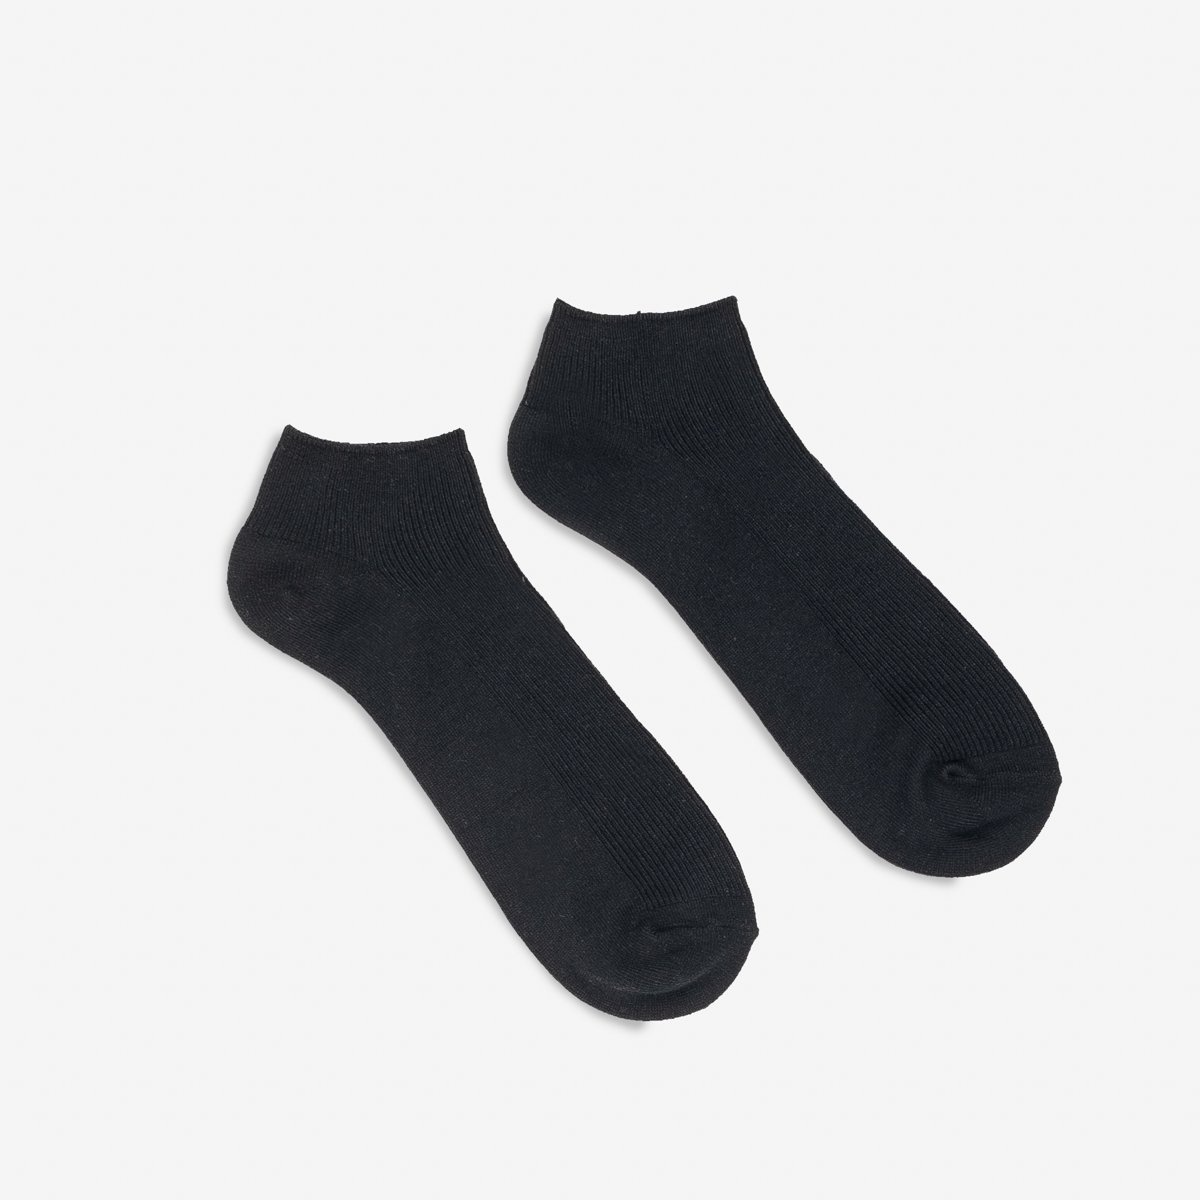 UTSS-BLK UTILITEES Mixed Cotton Sneaker Socks - Black - 1